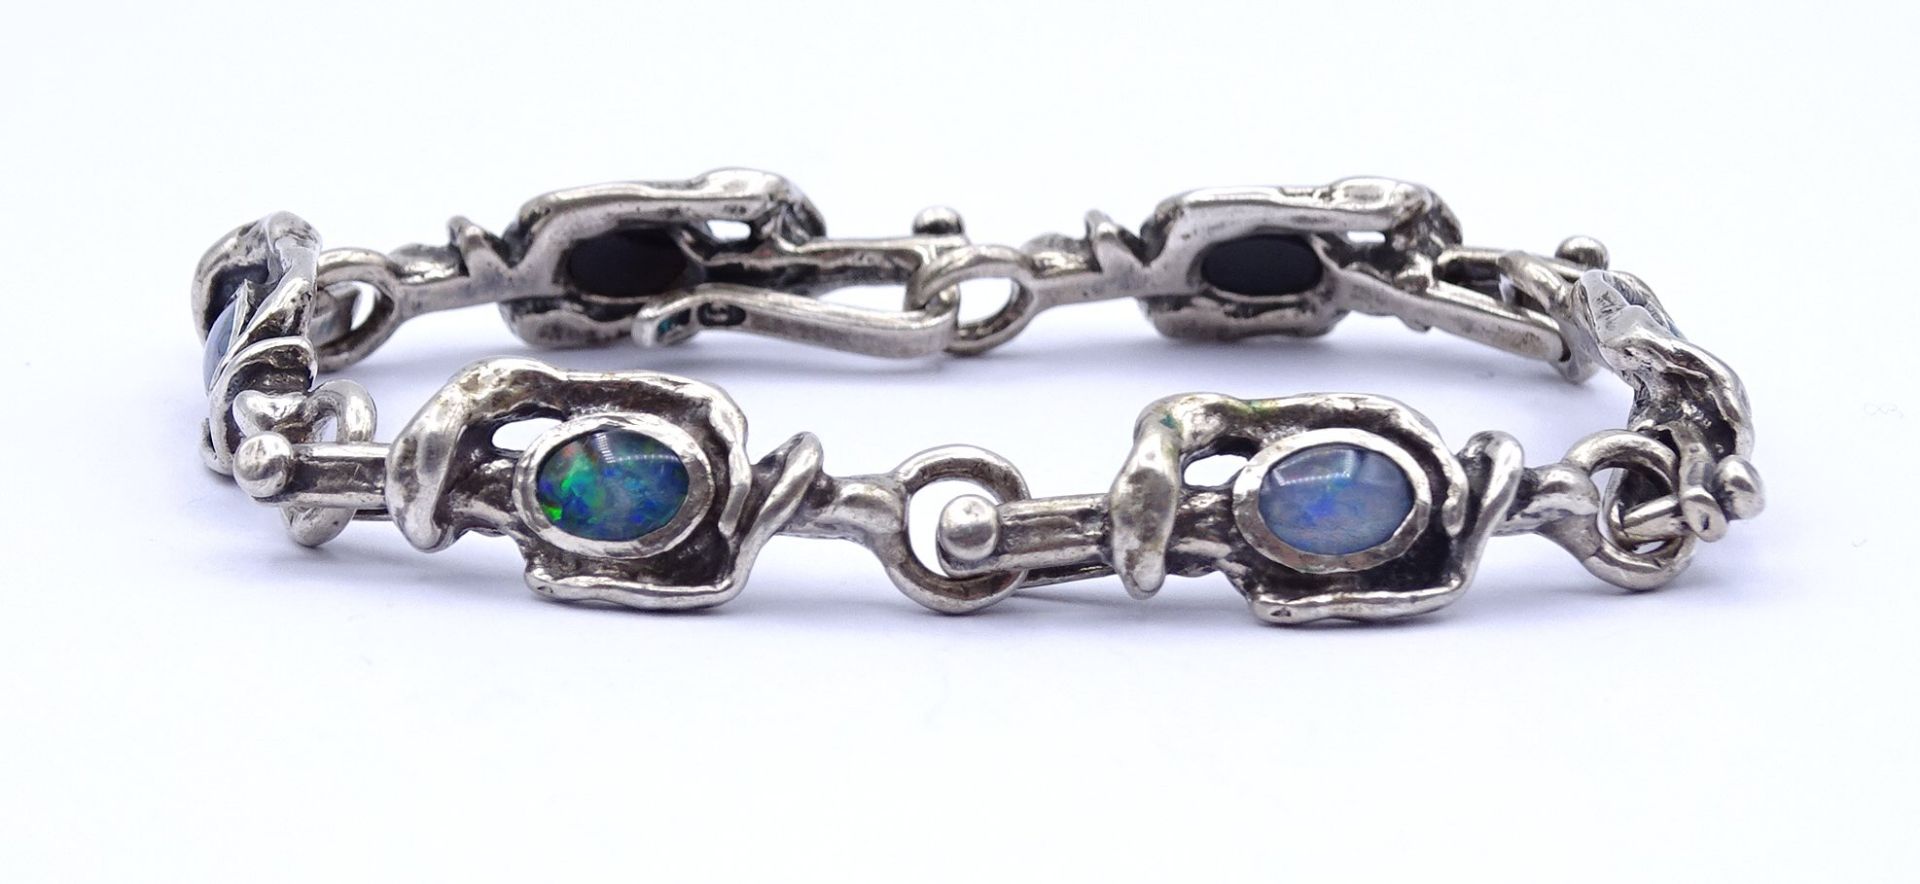 Armband mit 6 Opale, Silber 835/000, L. 19cm, 26g.